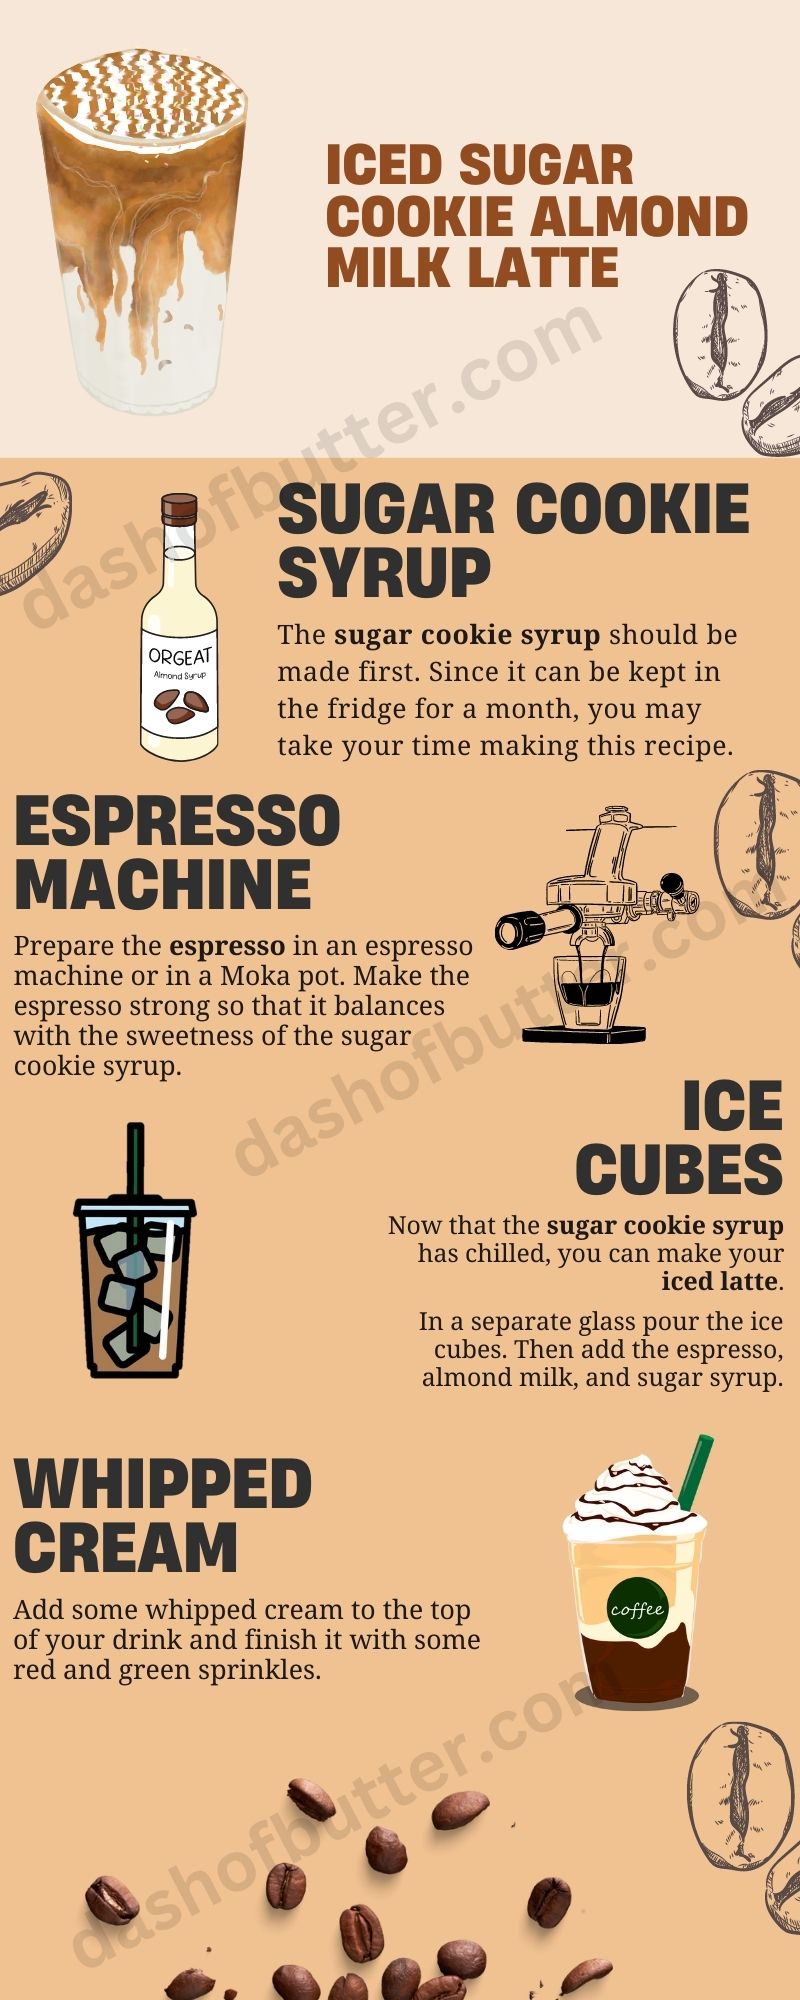 Starbucks Iced Sugar Cookie Almond Milk Latte Recipe